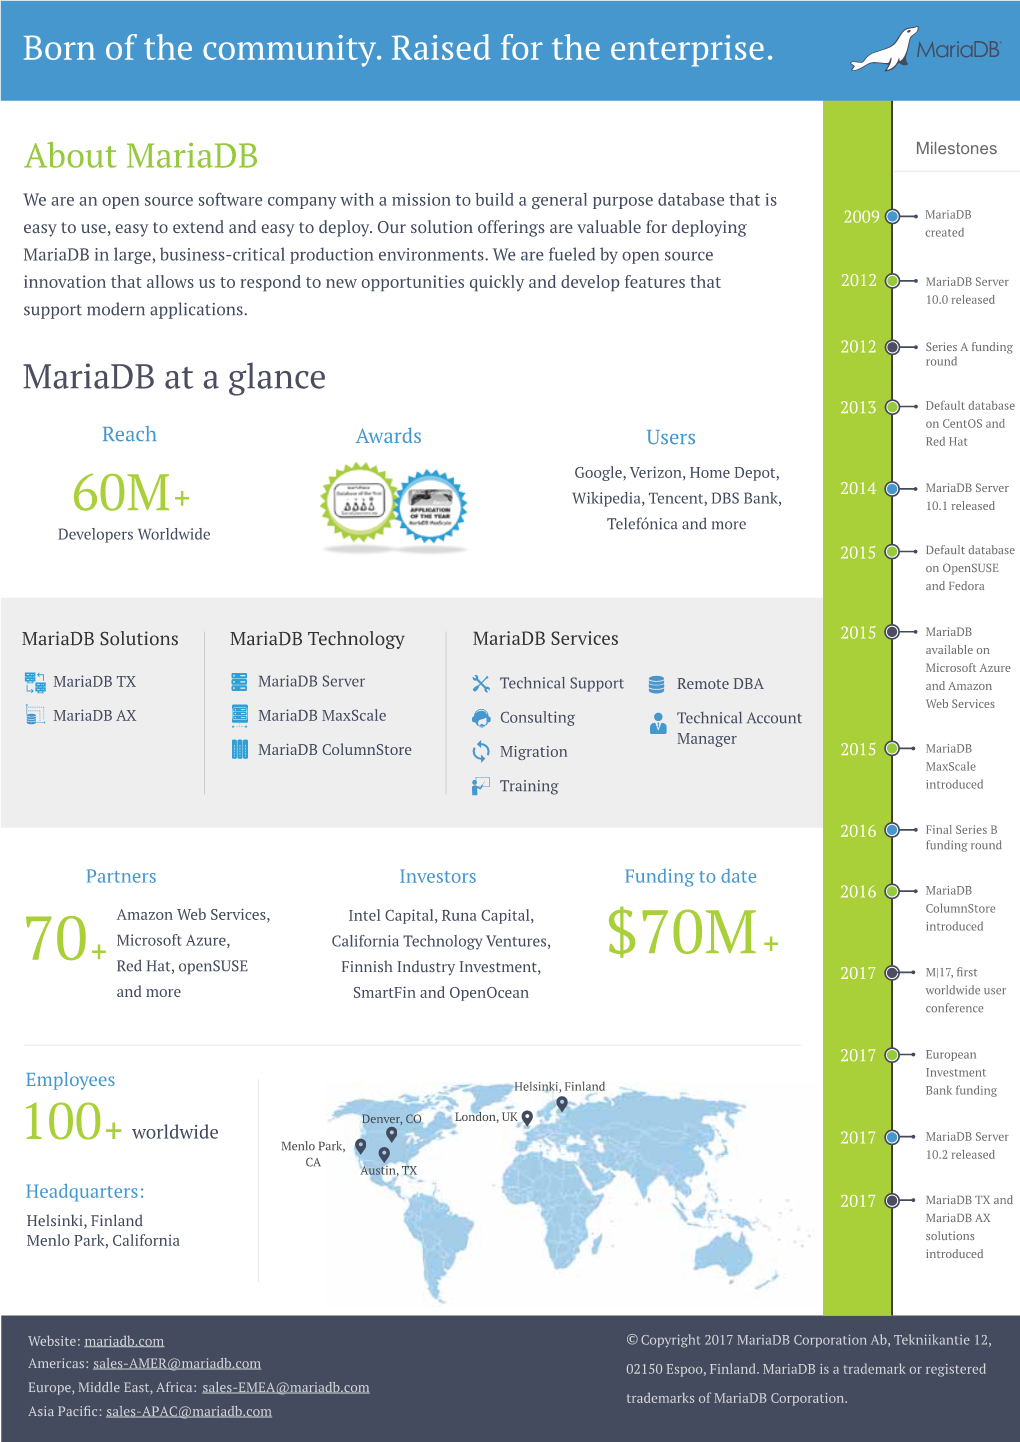 Mariadb Company Overview